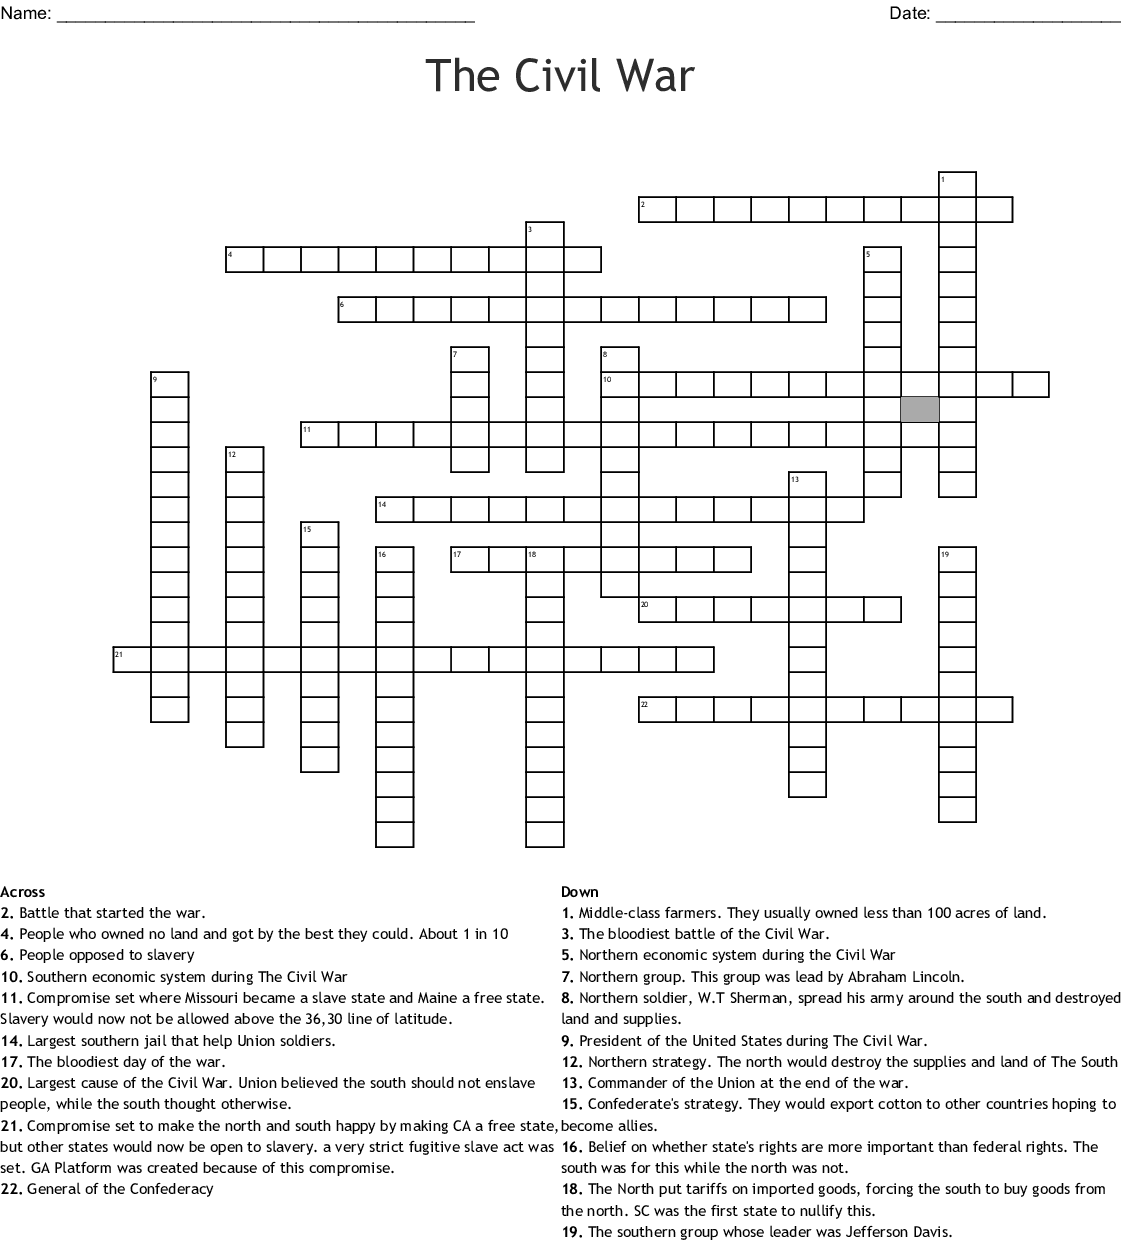 Free Printable Civil War Crossword Puzzles